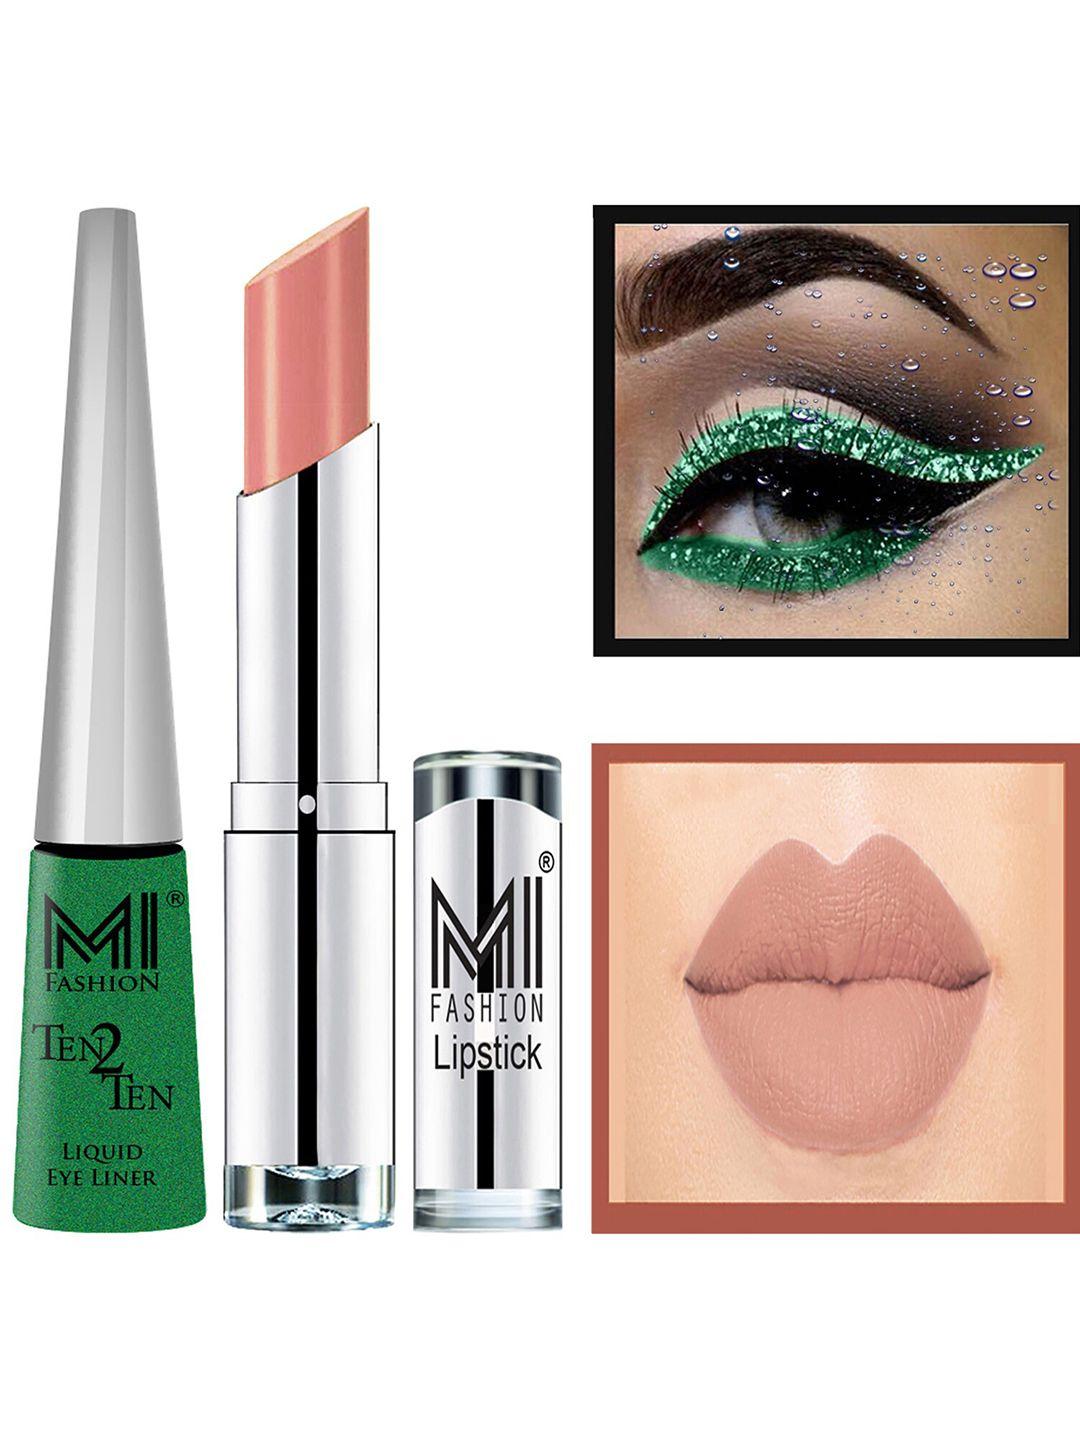 mi fashion set of ten2ten liquid eyeliner - 04 & creme matte lipstick - 25